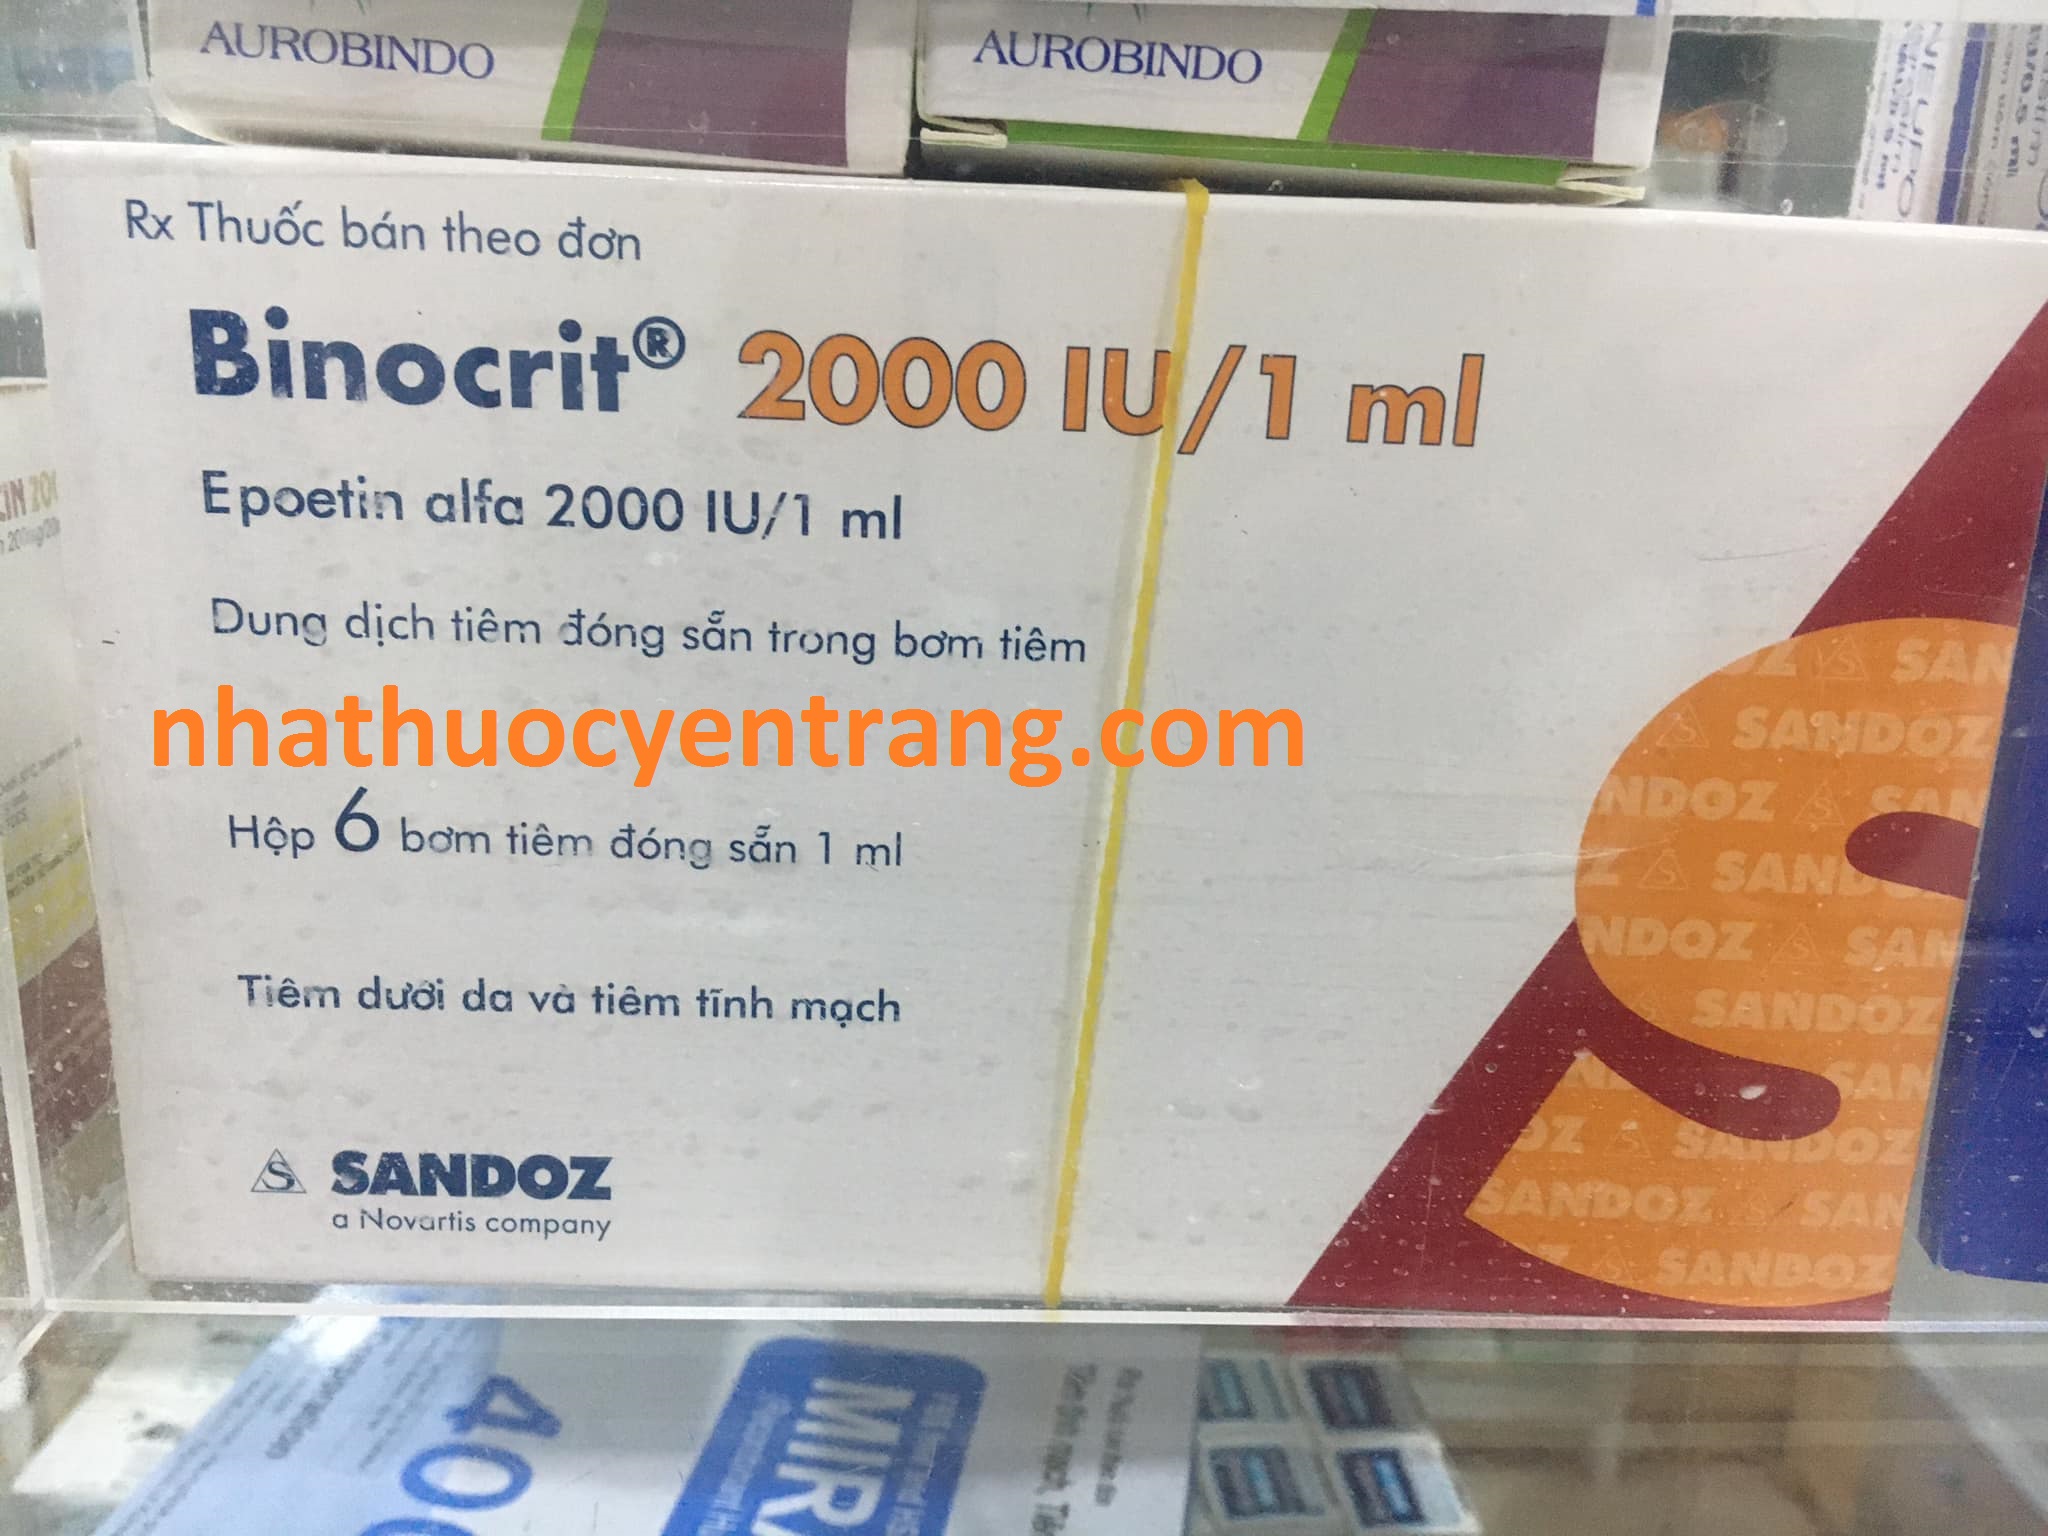 Binocrit 2000 IU/1 ml